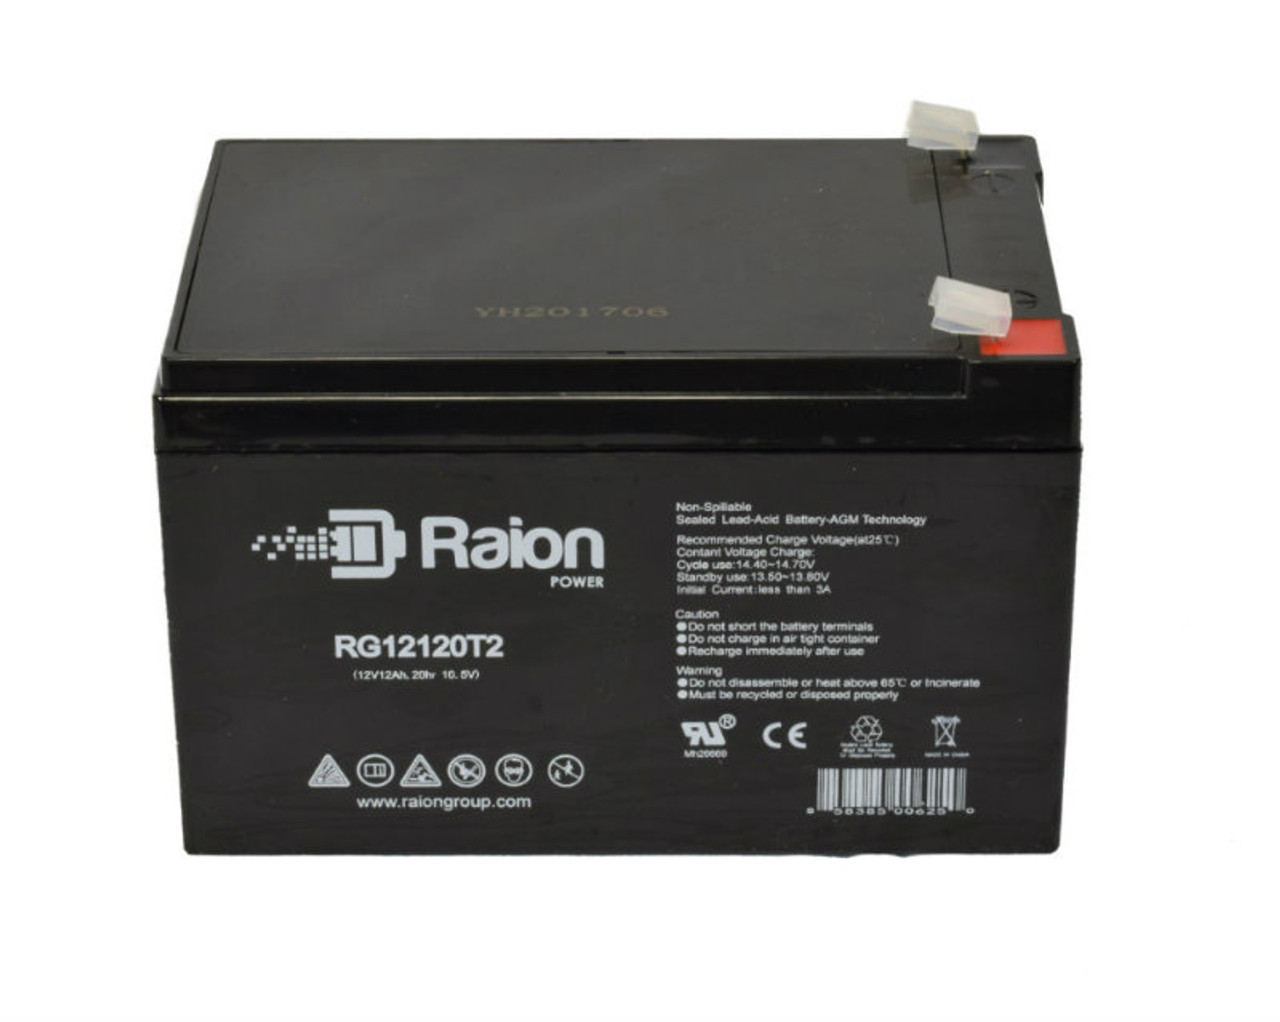 Raion Power RG12120T2 SLA Battery for ADI 25360